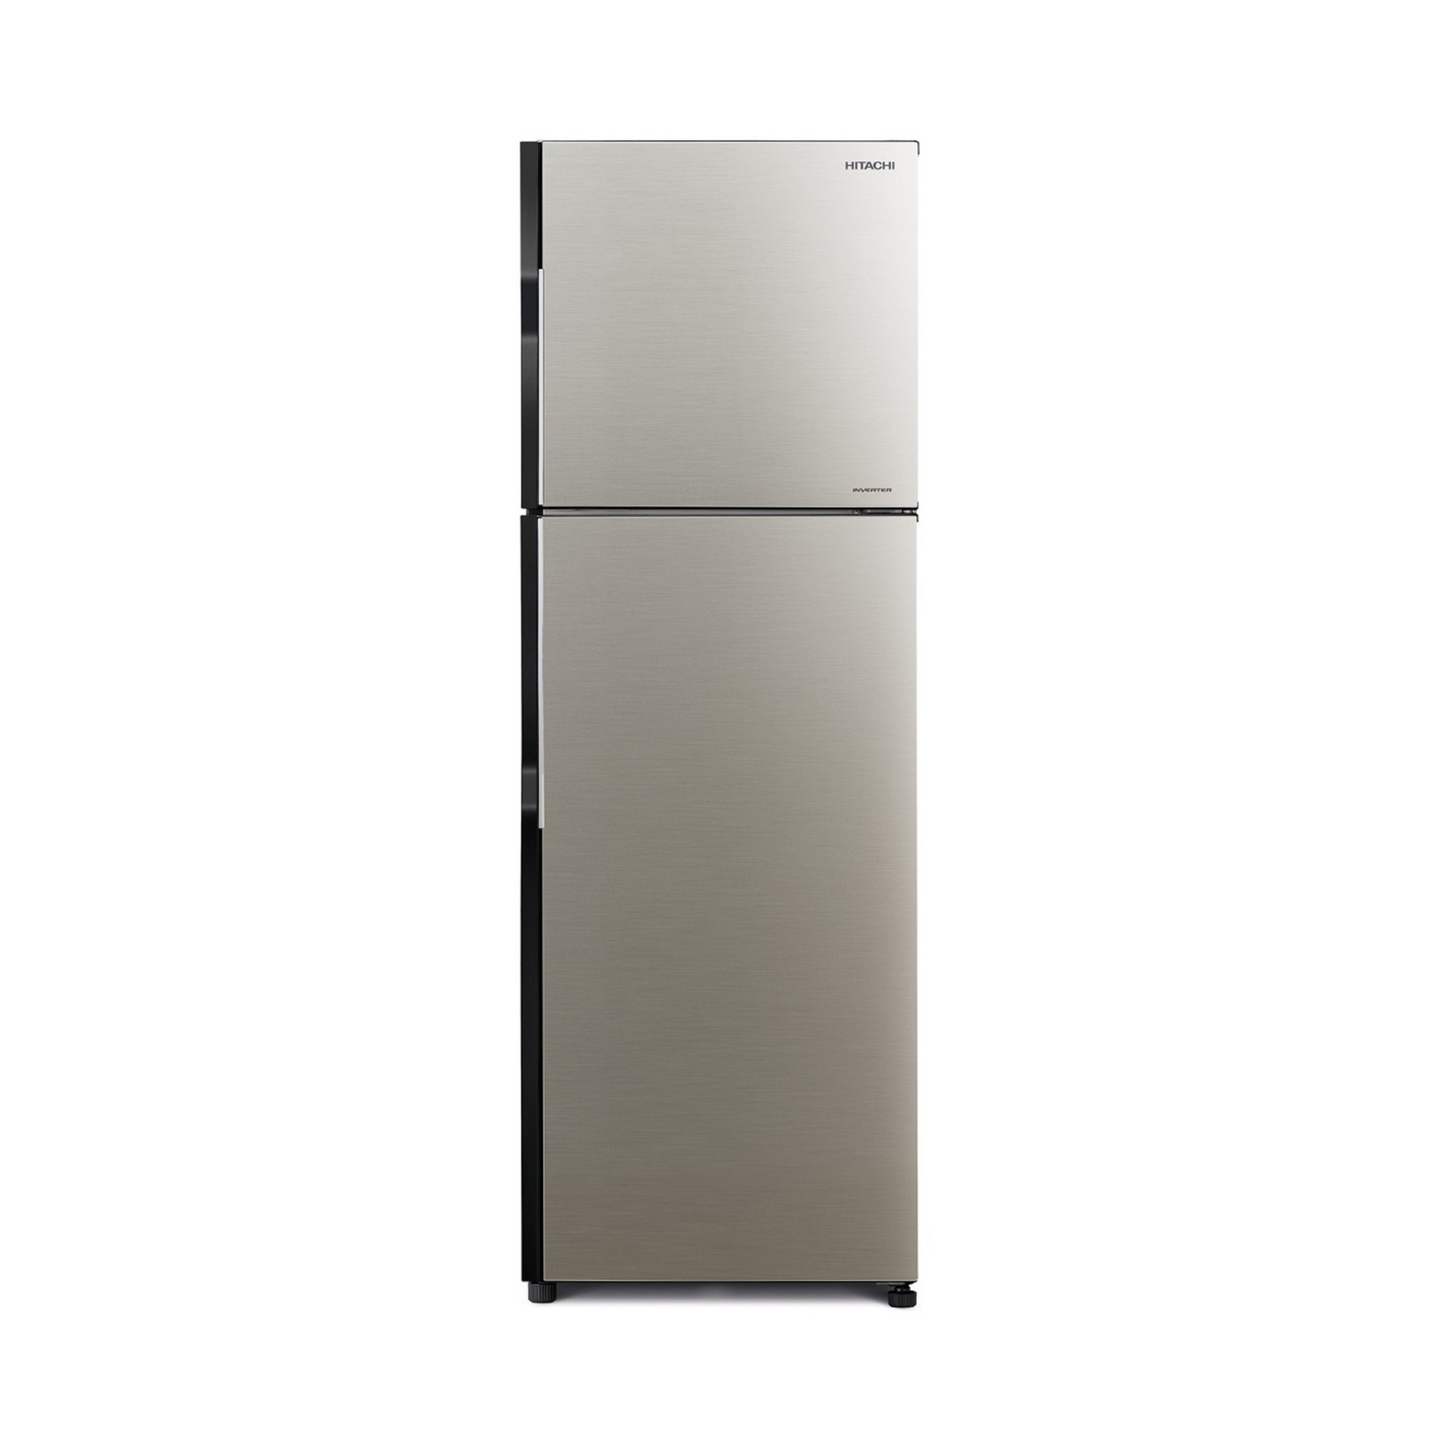 Hitachi 300L Top Mount Inverter Refrigerator, RH330PUK7KBSL